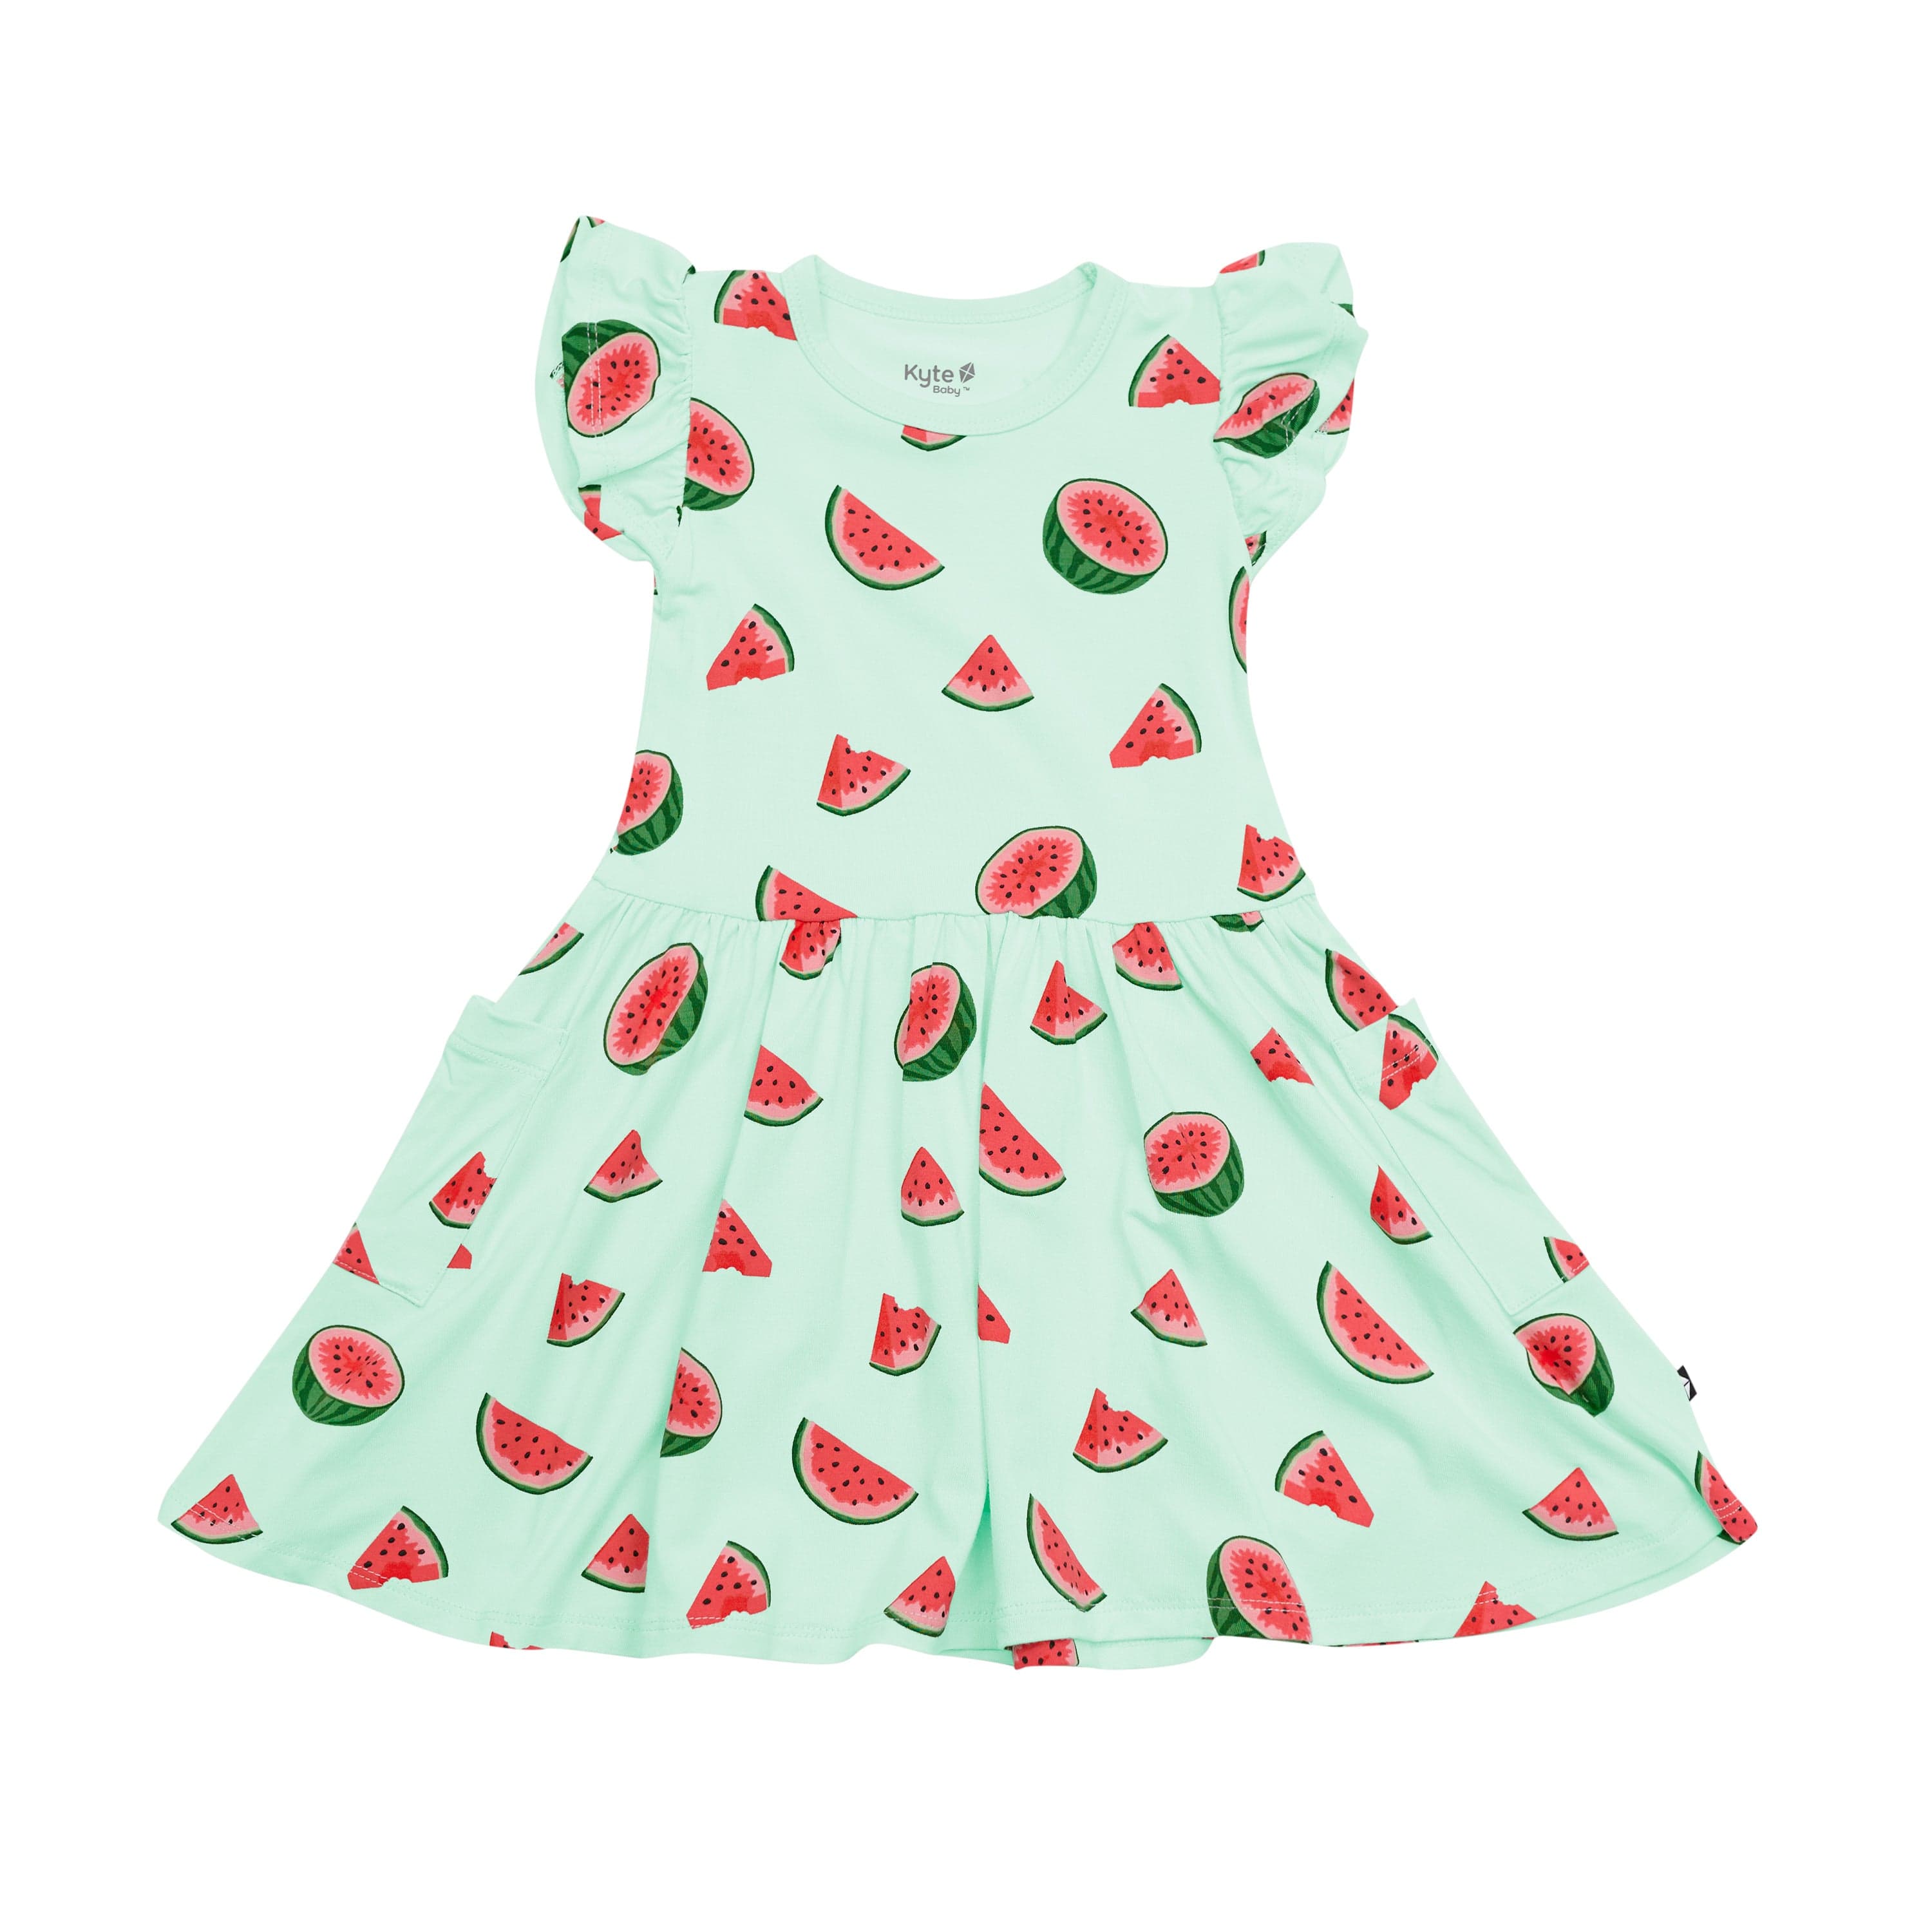 Kyte Baby Pocket Dress in Watermelon